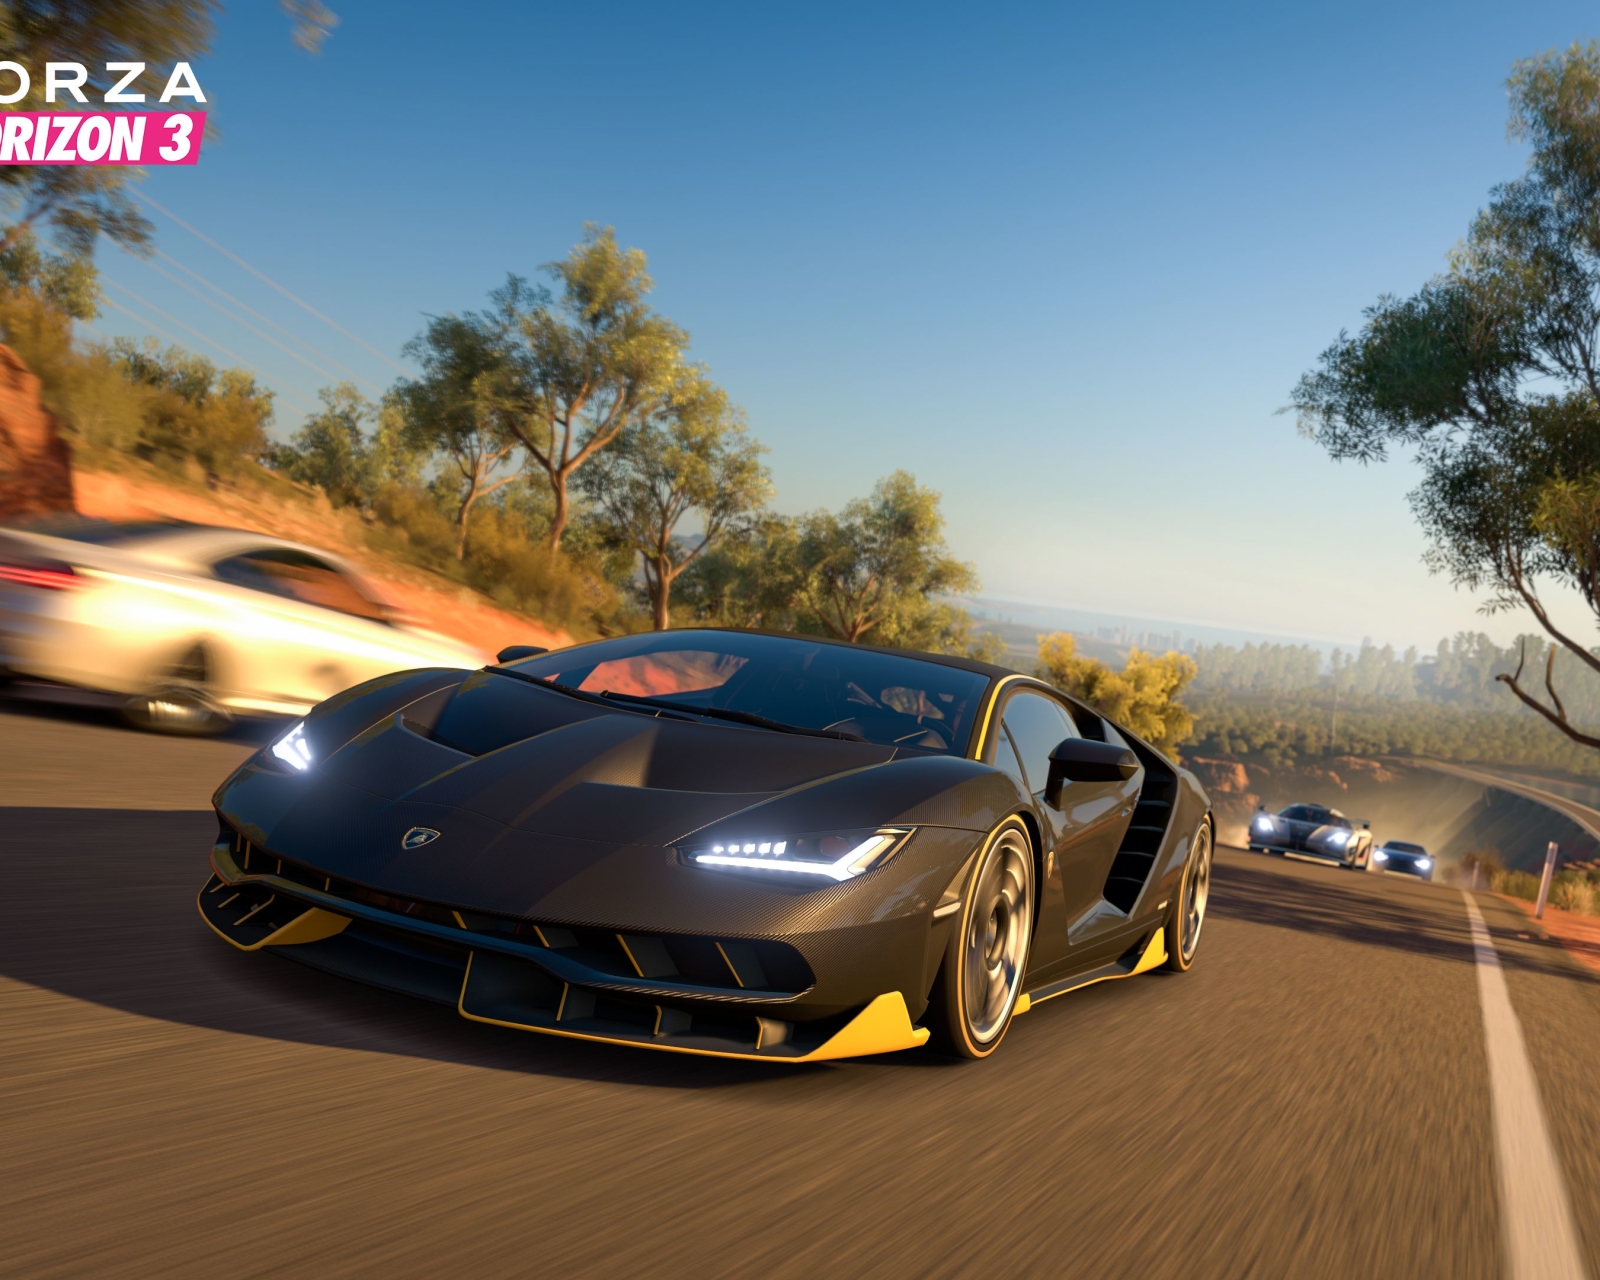 Laden Sie das Lamborghini, Lamborghini Centenario, Computerspiele, Videospiel, Forza Horizon 3, Forza-Bild kostenlos auf Ihren PC-Desktop herunter